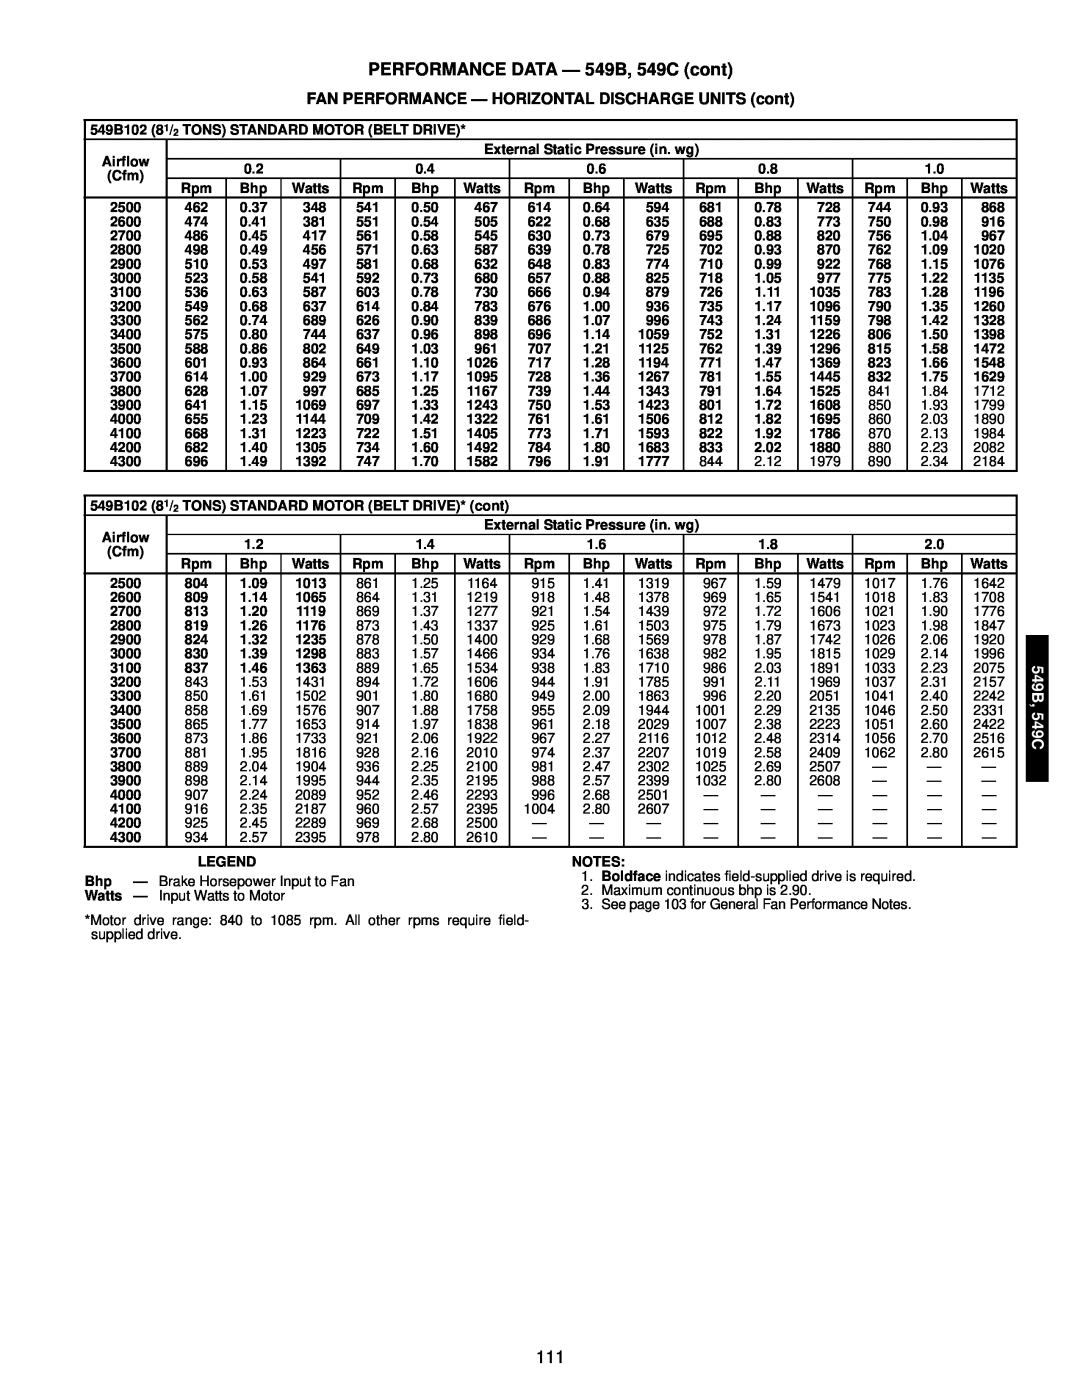 Bryant manual PERFORMANCE DATA - 549B, 549C cont, FAN PERFORMANCE — HORIZONTAL DISCHARGE UNITS cont 